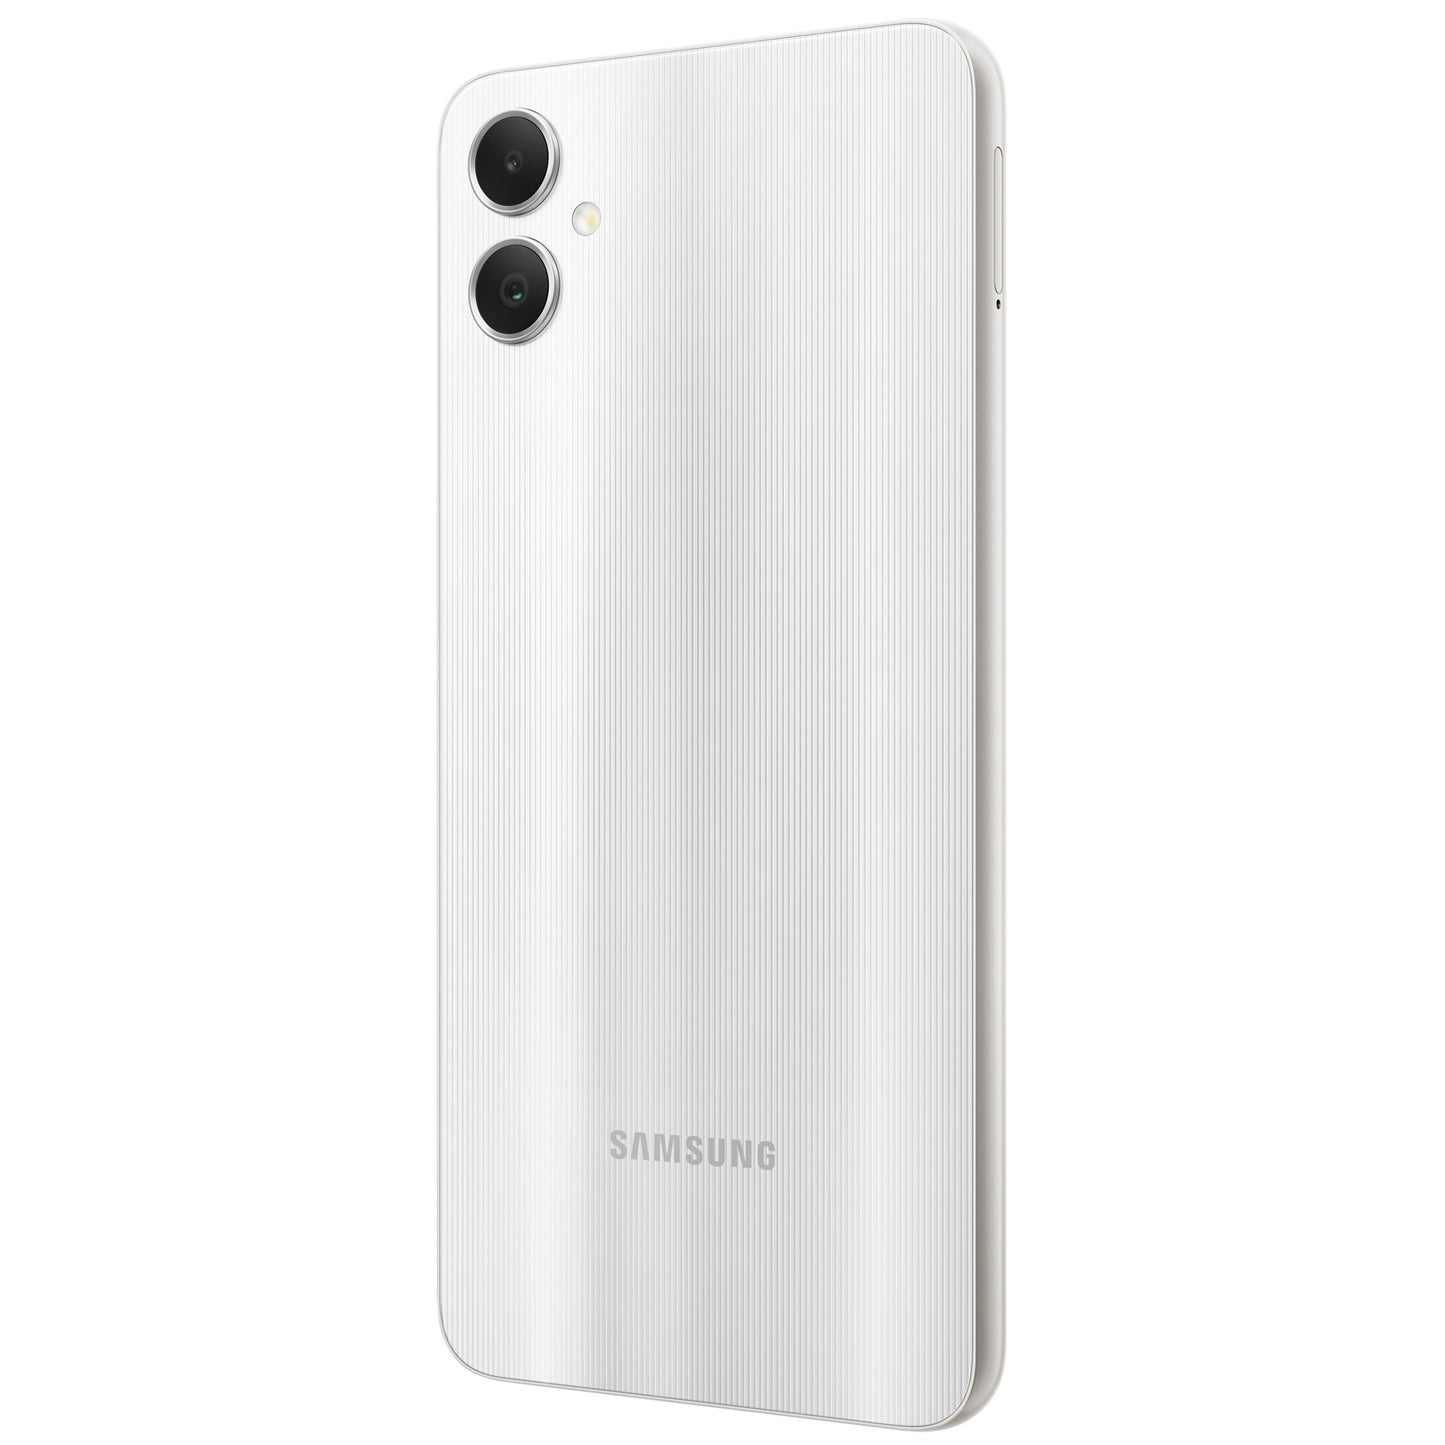 Samsung Galaxy AO5 64GB Silver Brand New